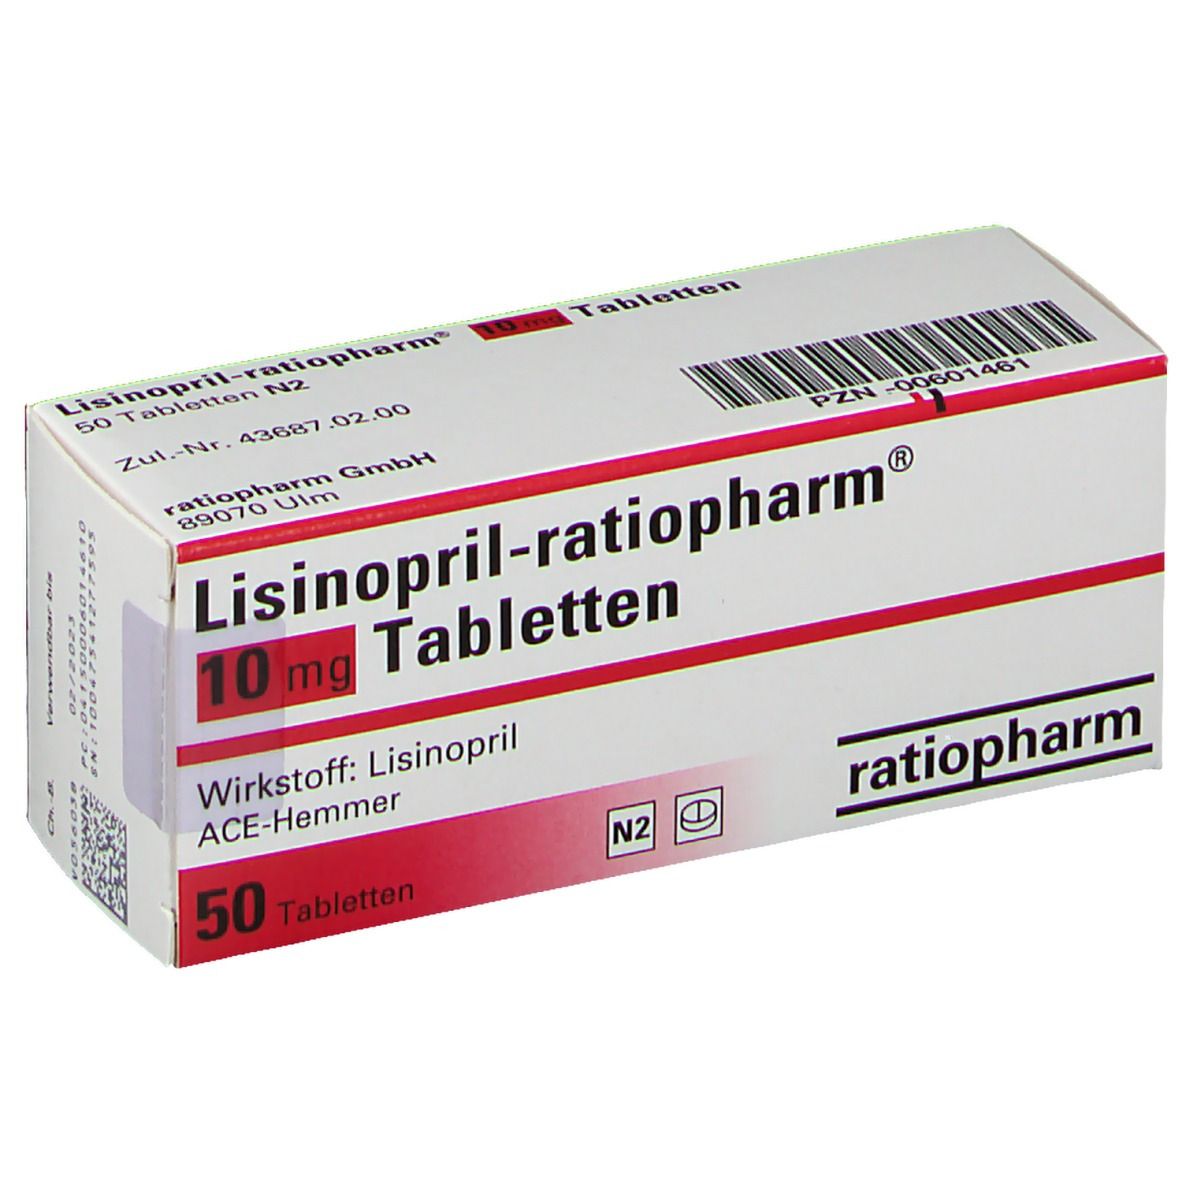 Lisinopril-ratiopharm® 10 mg